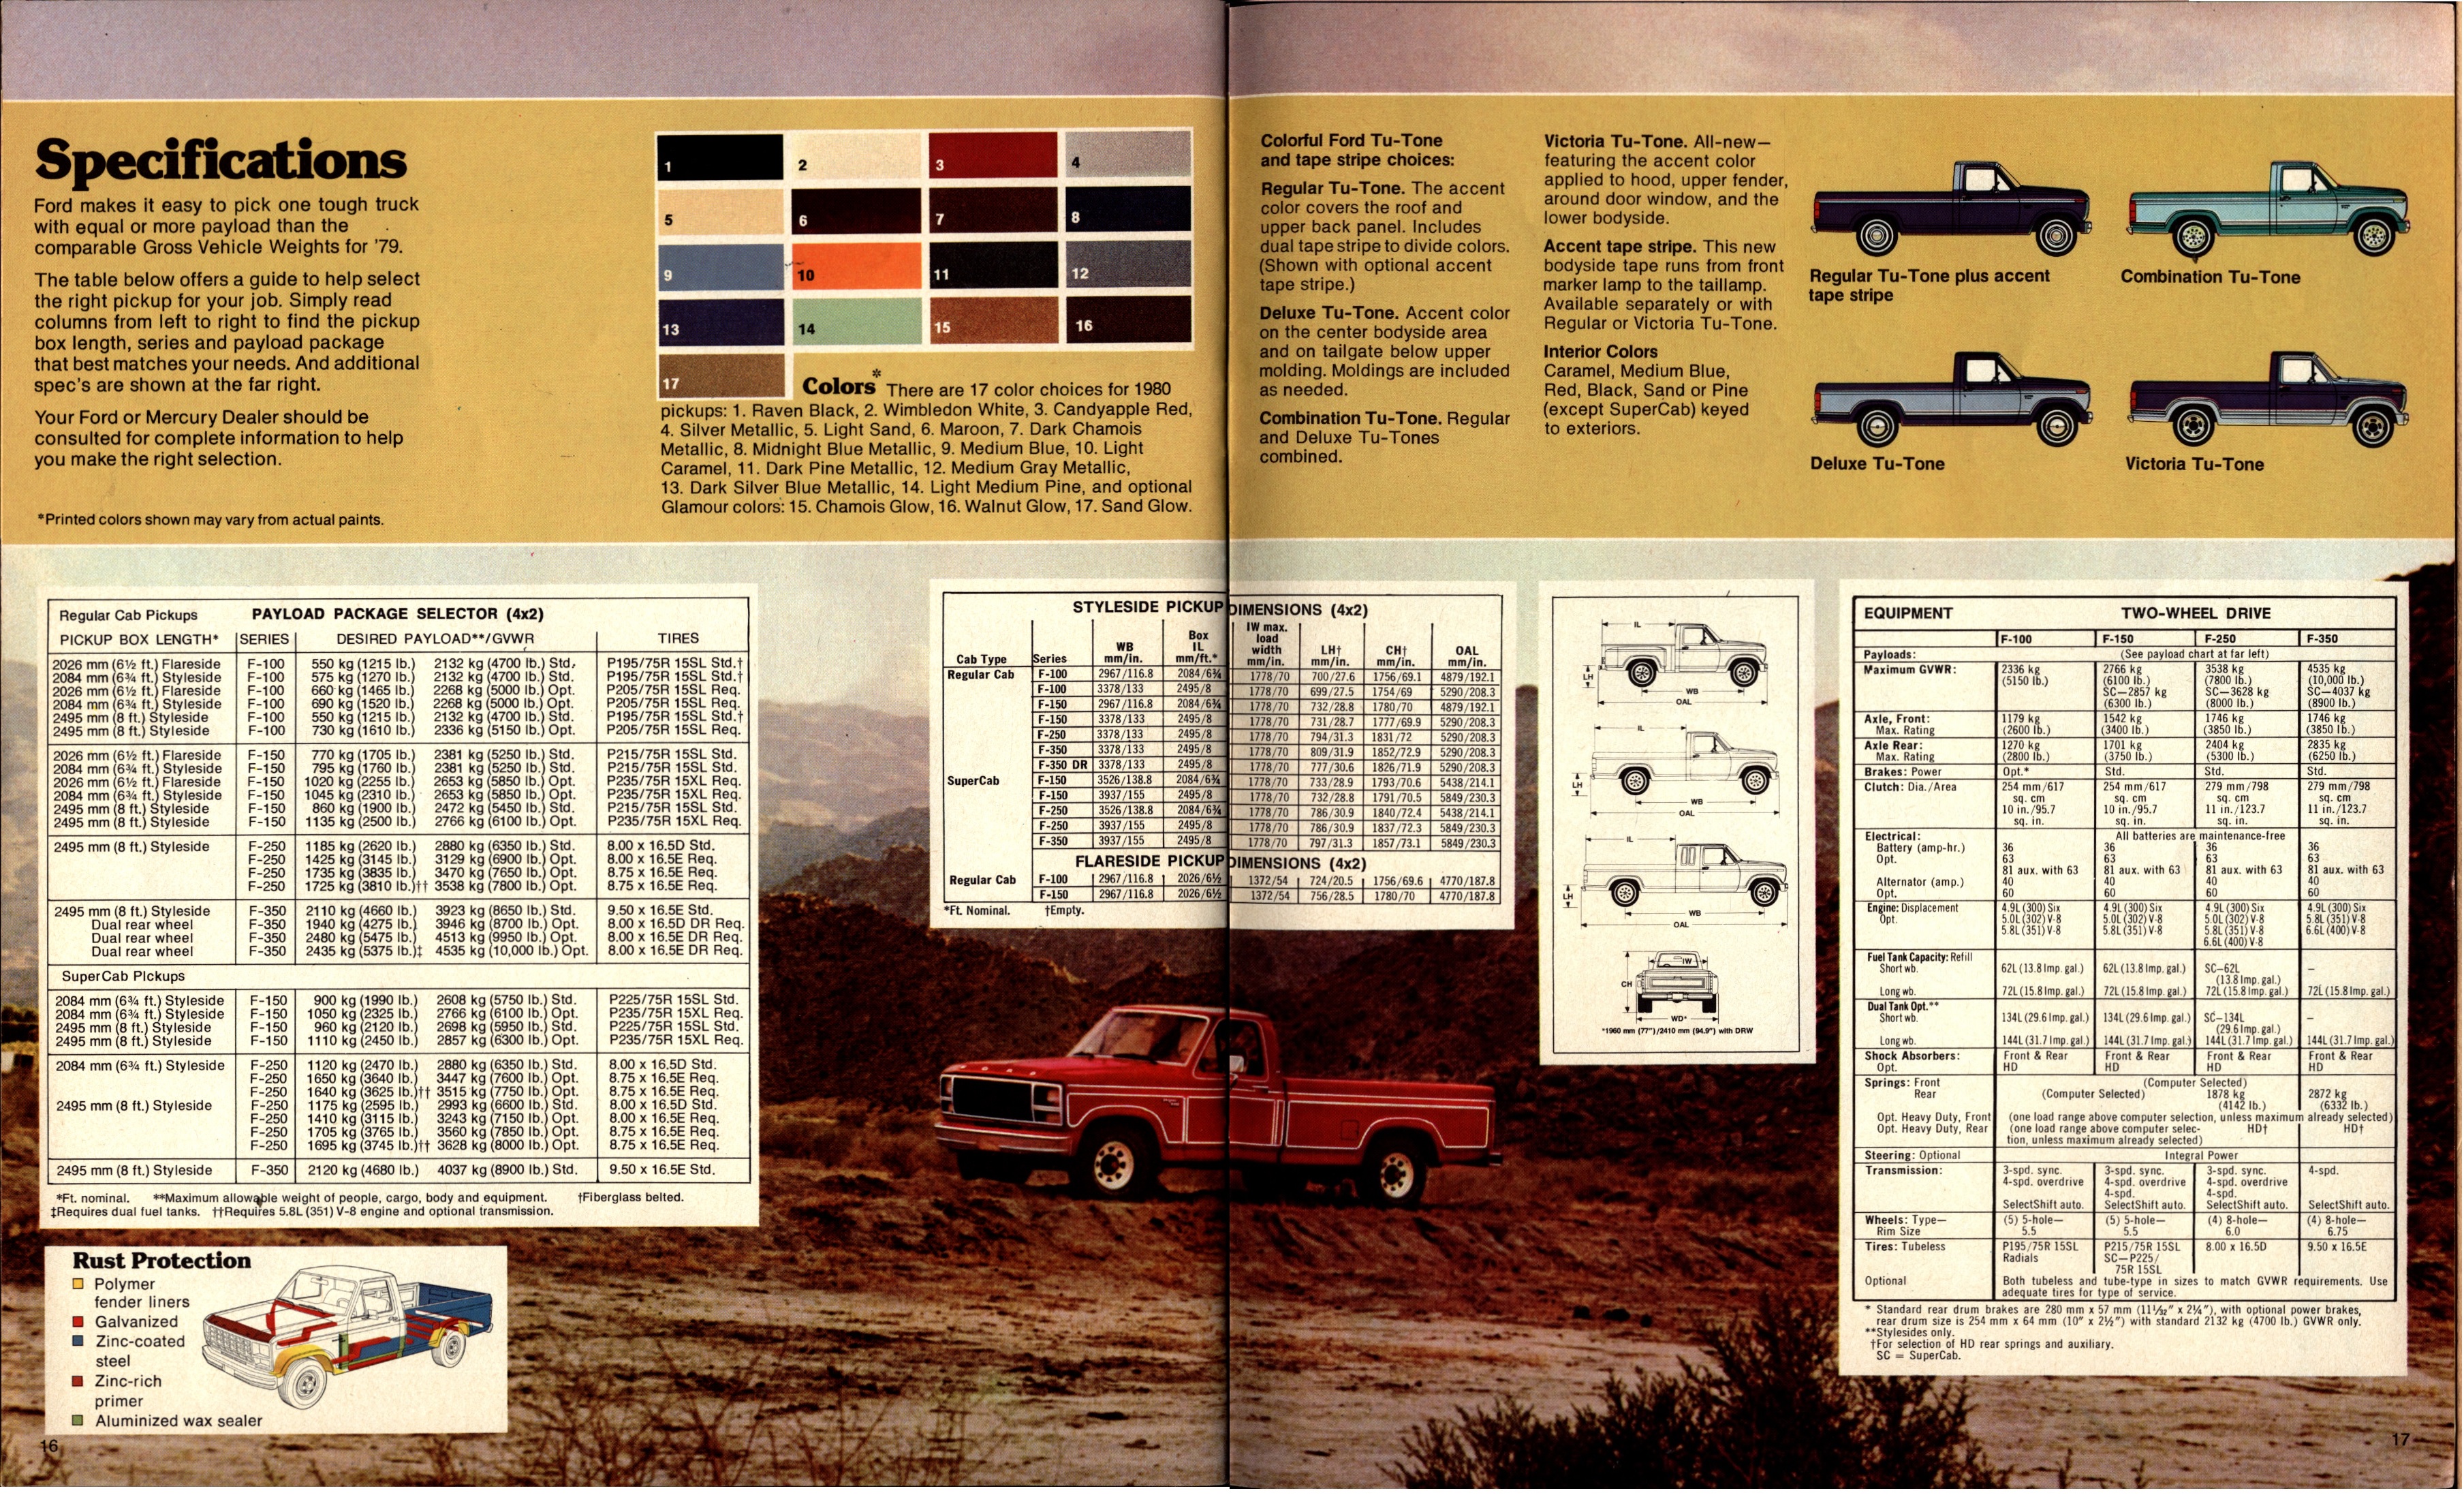 1980 Ford Pickup Brochure (Cdn) 16-17